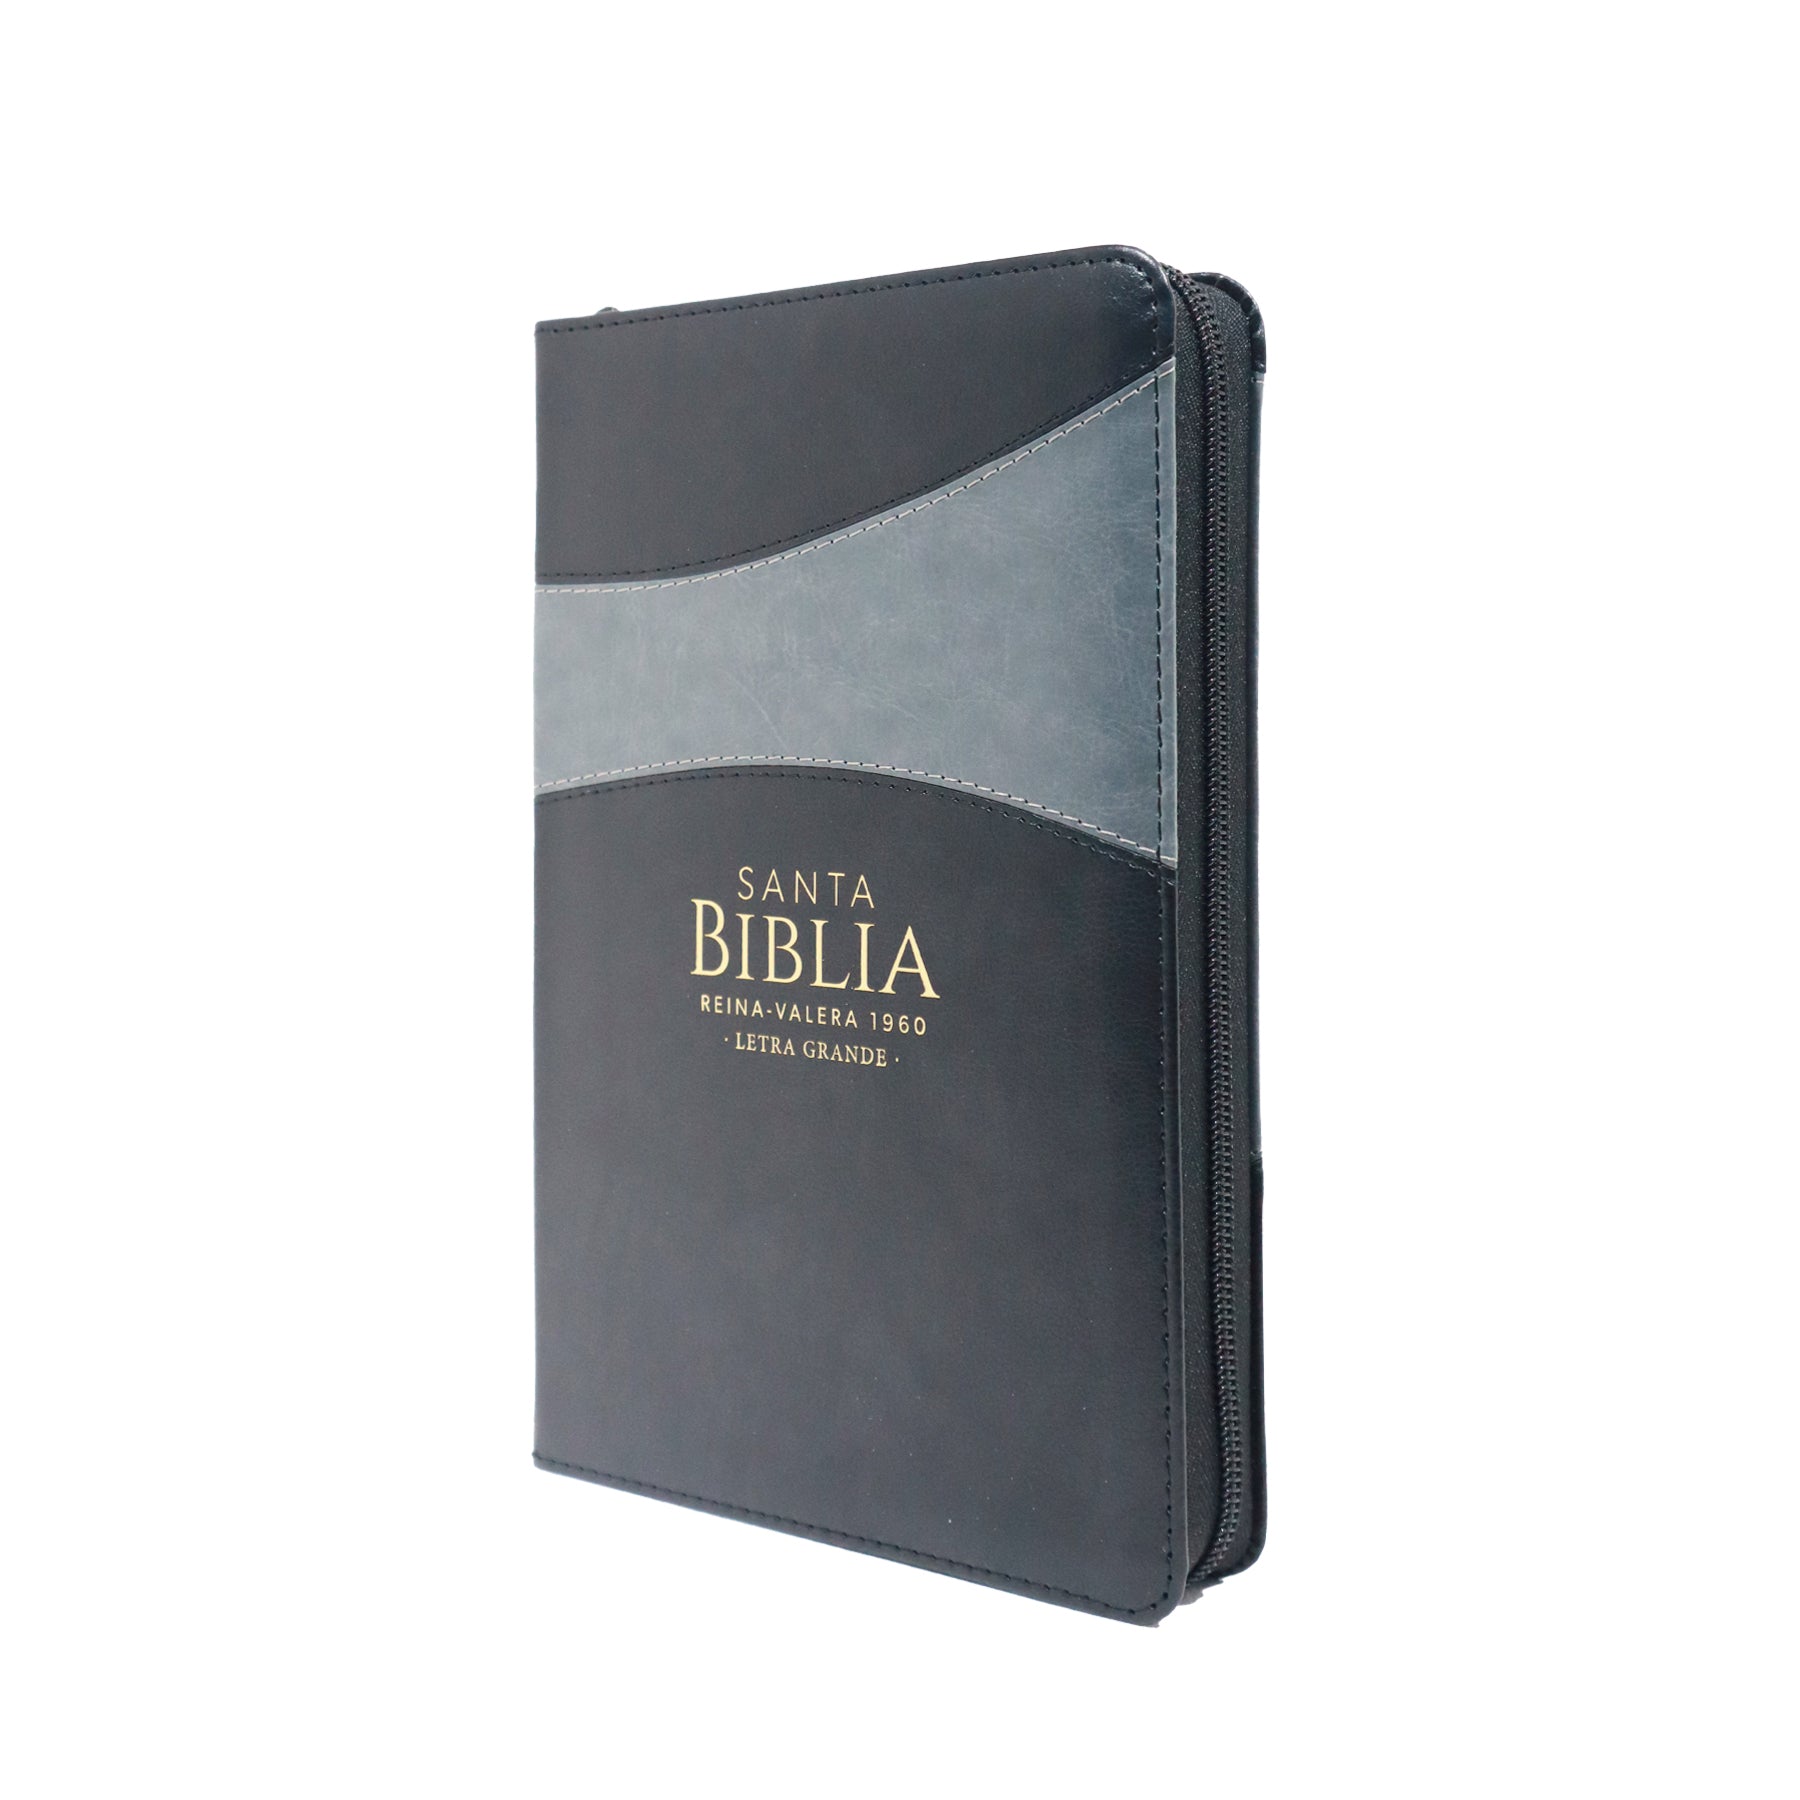 BIBLIA REINA VALERA 1960 LETRA GRANDE CLÁSICA BITONO NEGRO/GRIS